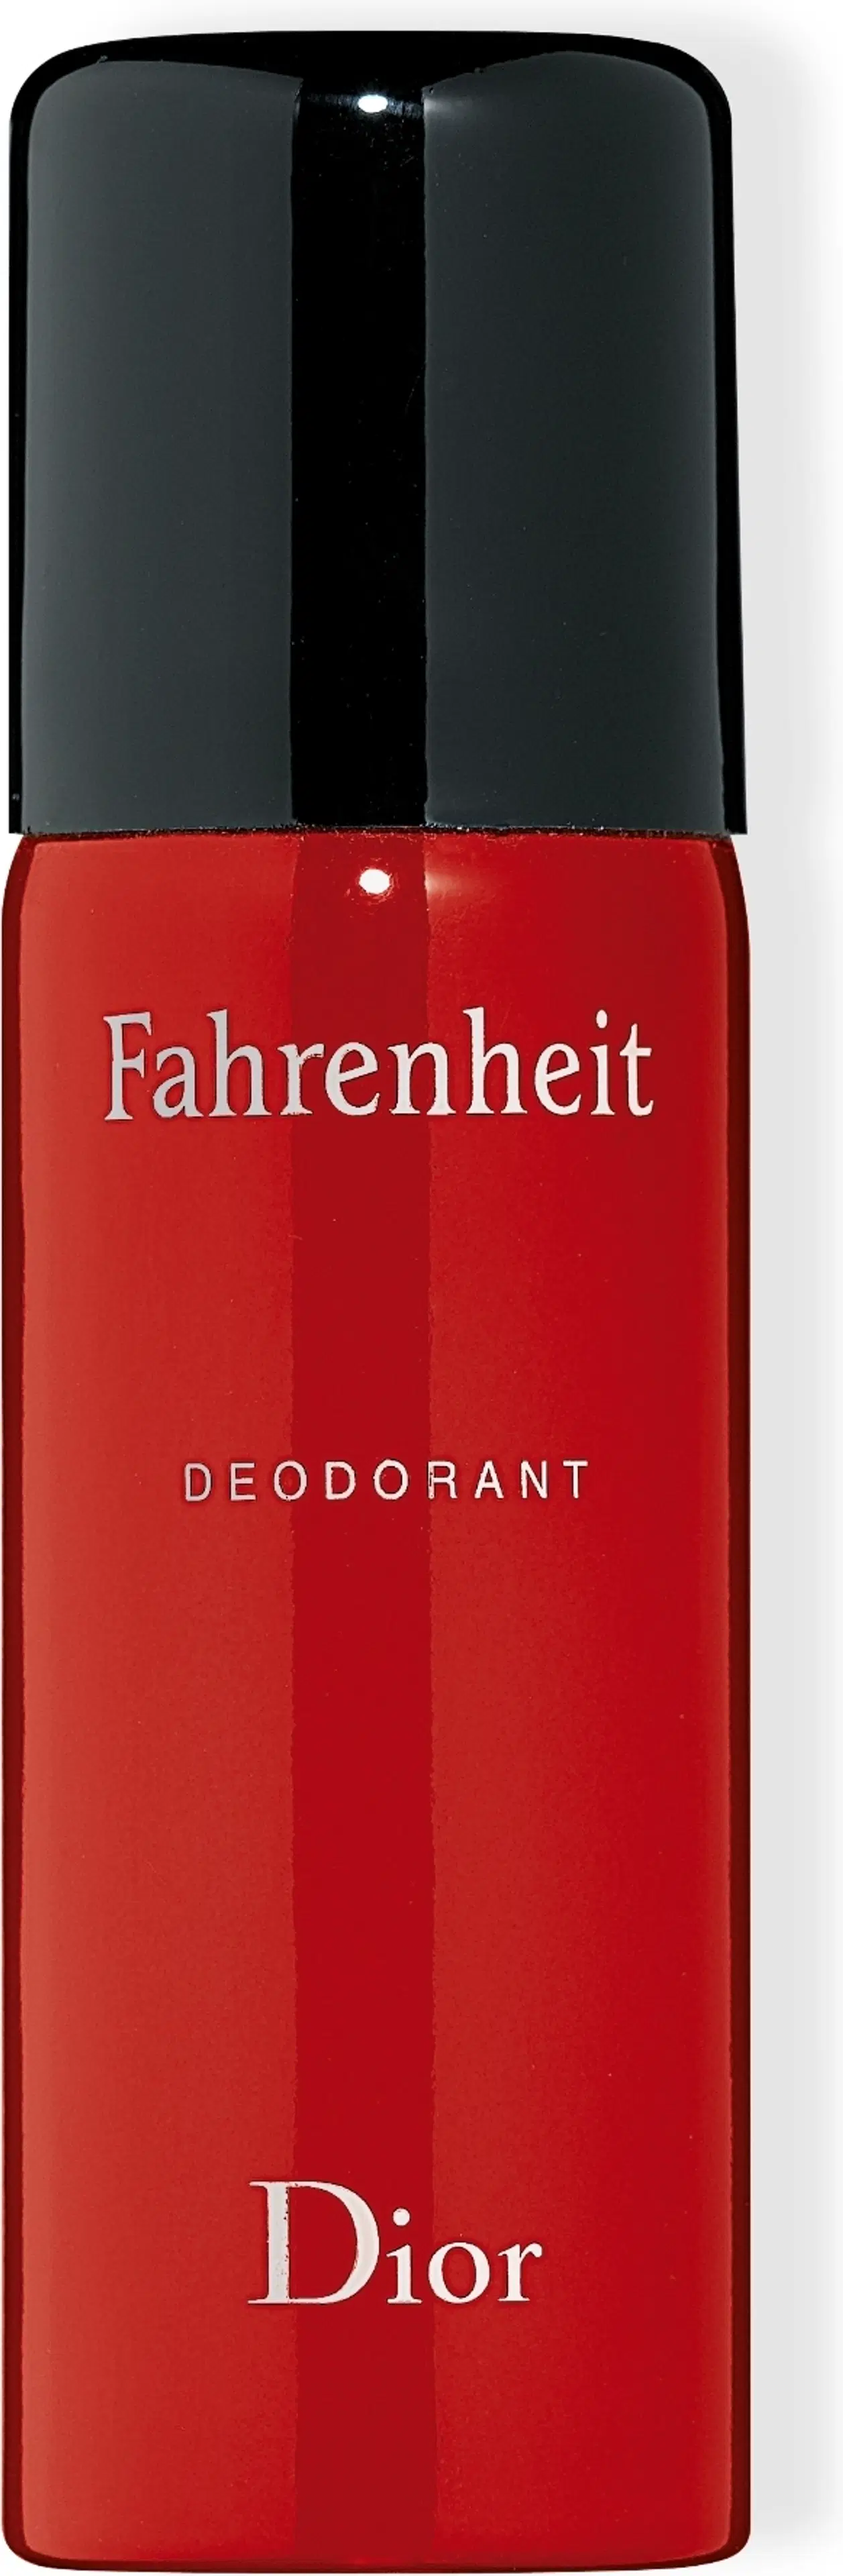 DIOR Fahrenheit Deodorant Spray 150 ml